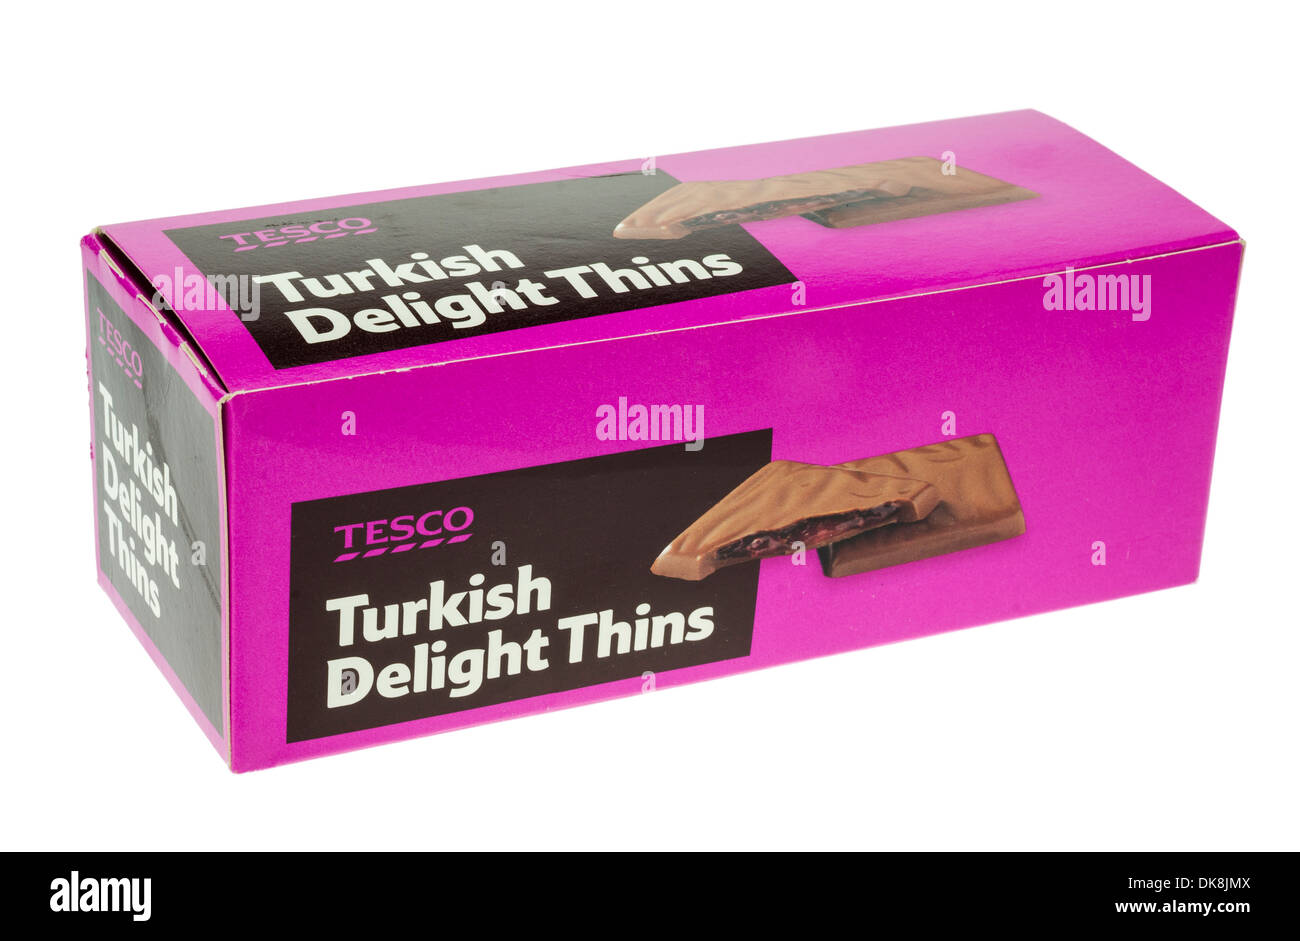 Tesco Turkish Delights Thins Chocolates. Stock Photo